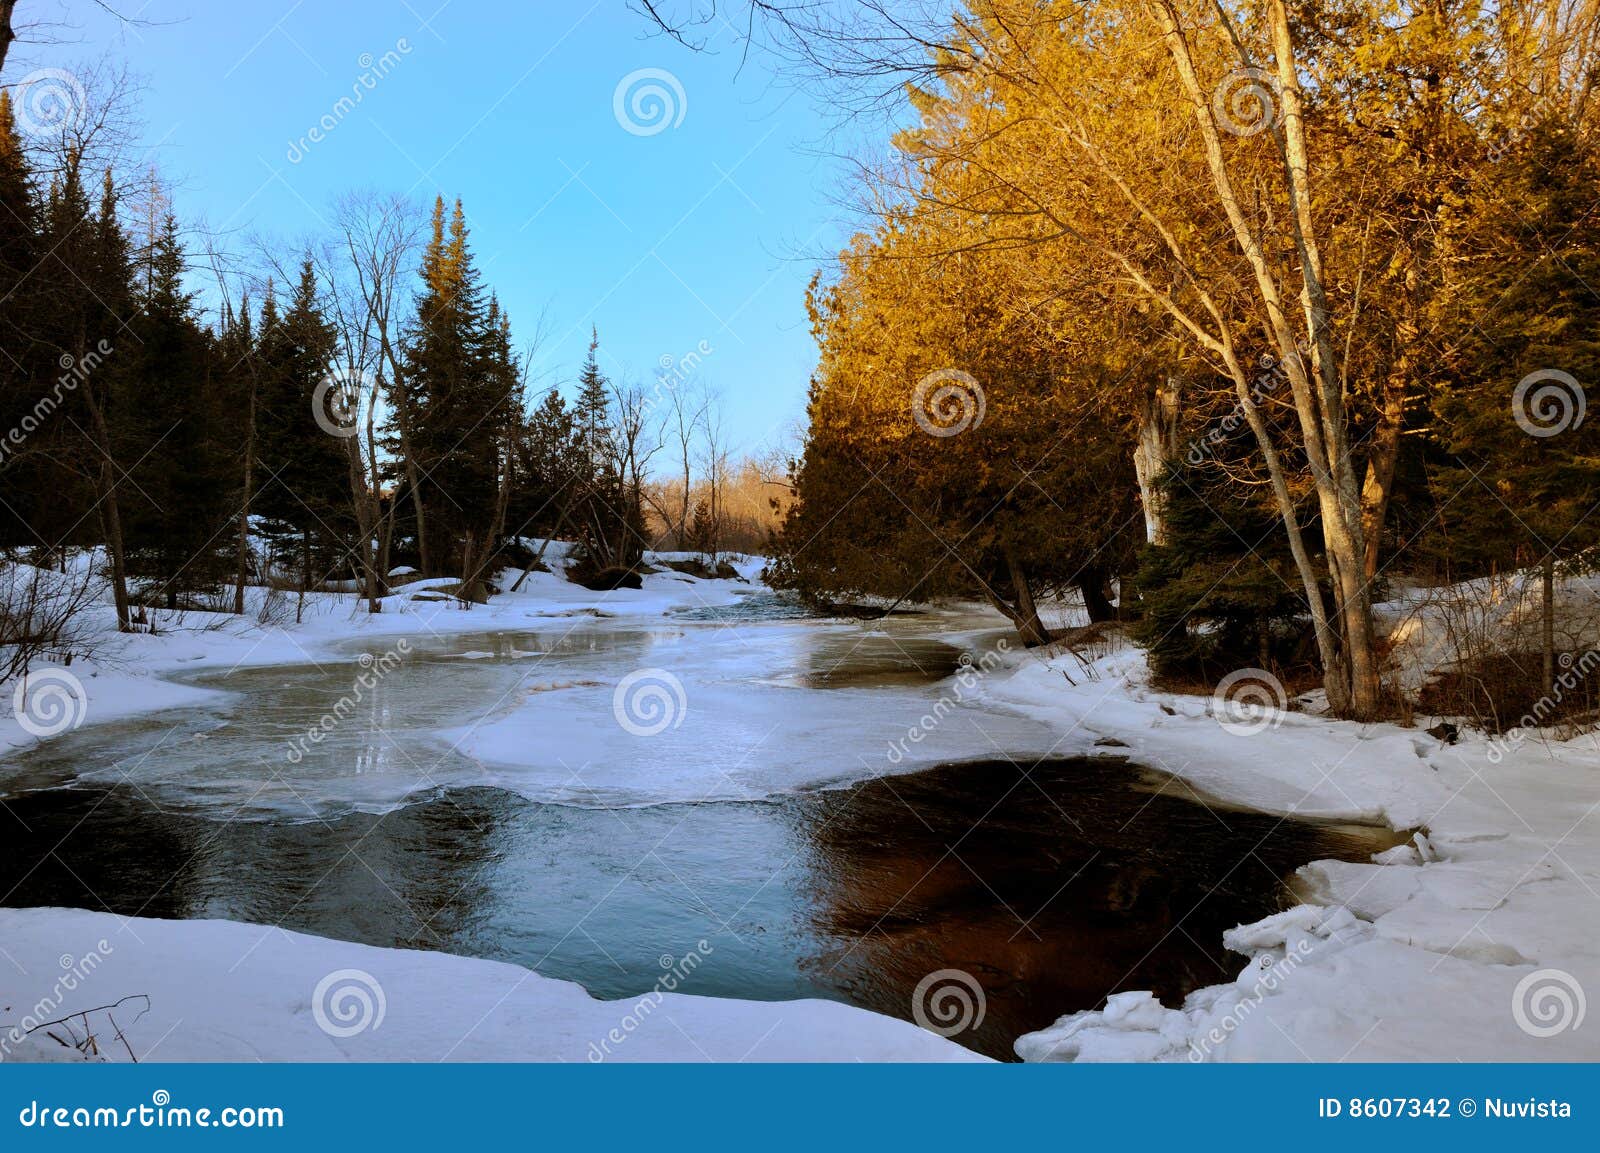 thawing creek